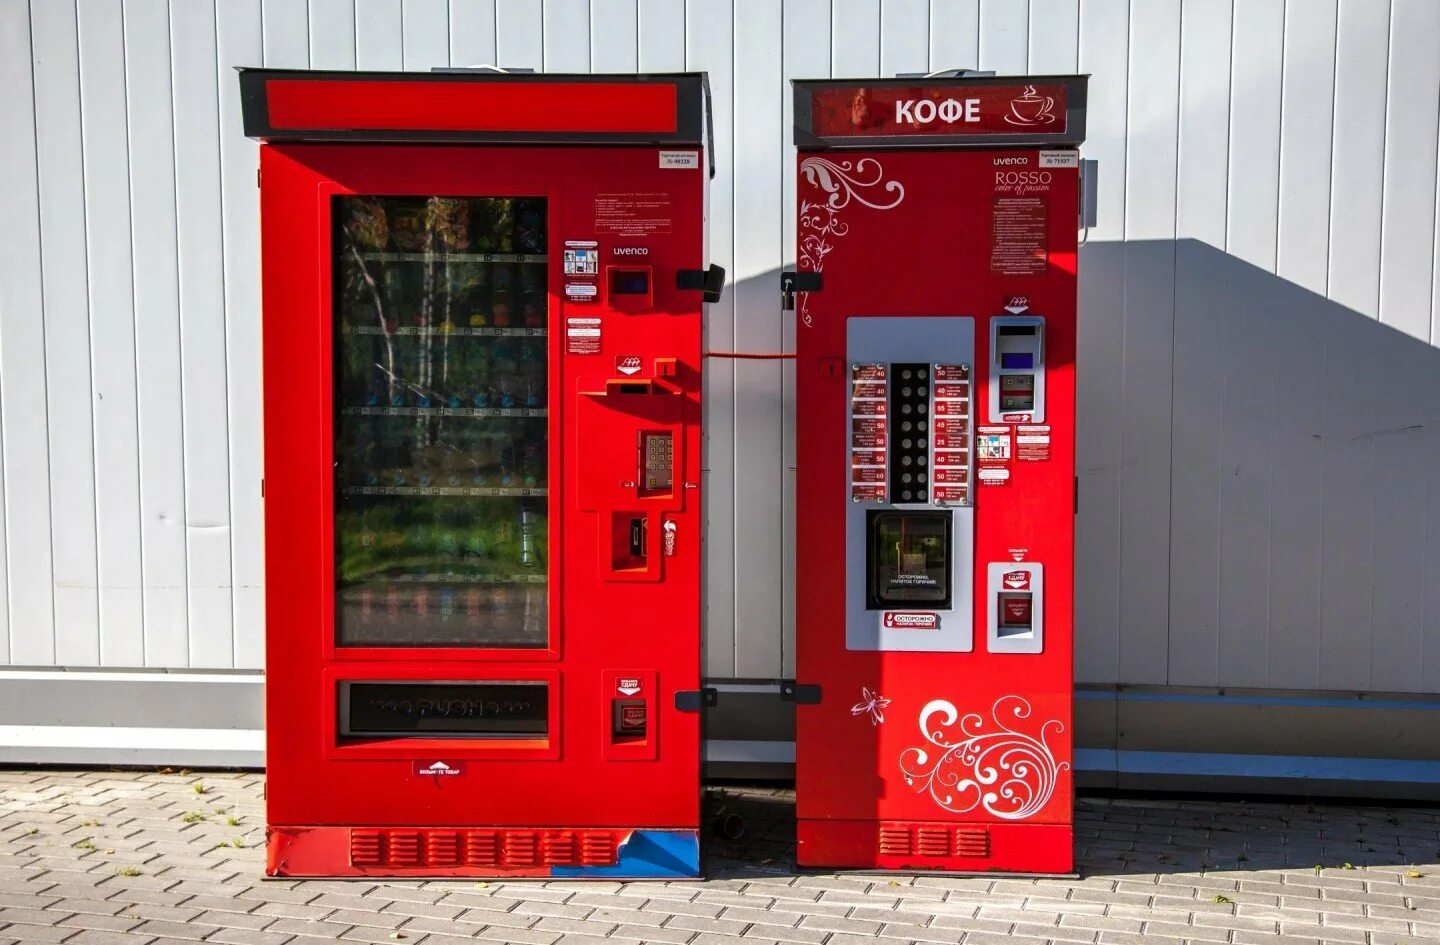 Кофейный автомат Unicum Rosso. Торговый кофейный автомат Unicum Rosso. Термобокс Уникум Россо уличный. Кофейный аппарат самообслуживания Unicum.